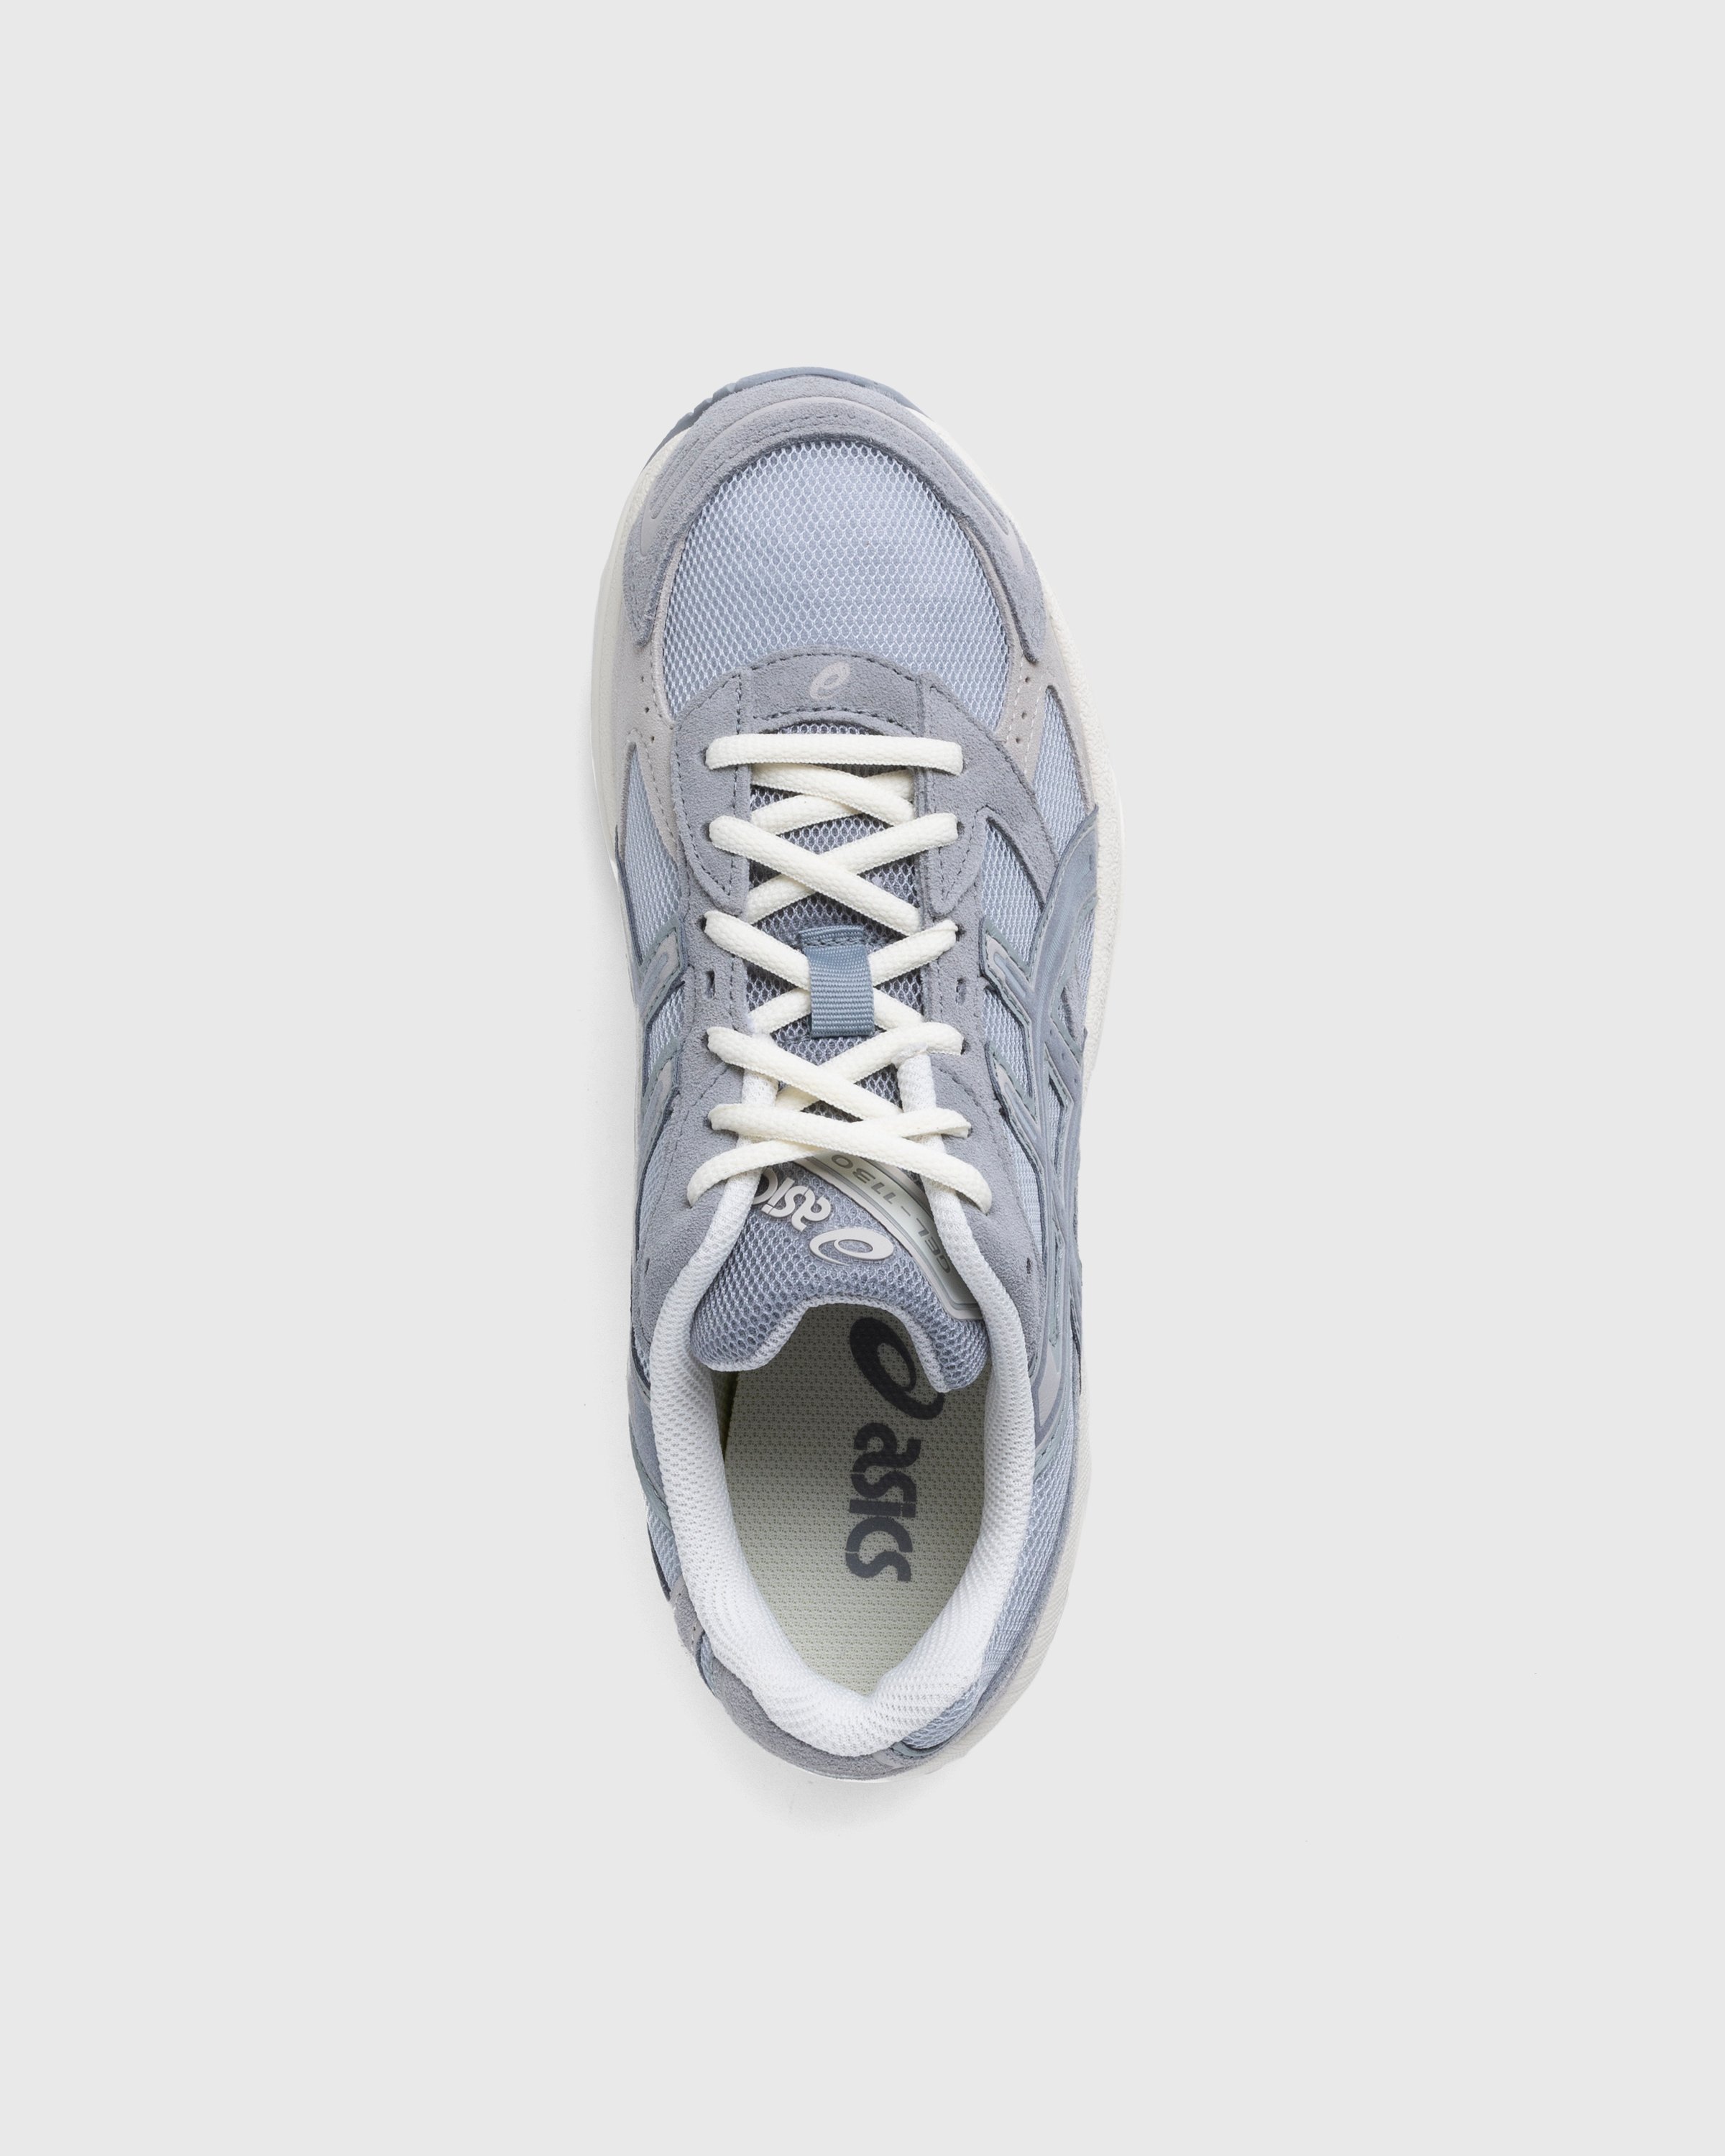 asics - Gel-1130 Piedmont Grey/Sheet Rock - Footwear - Grey - Image 5